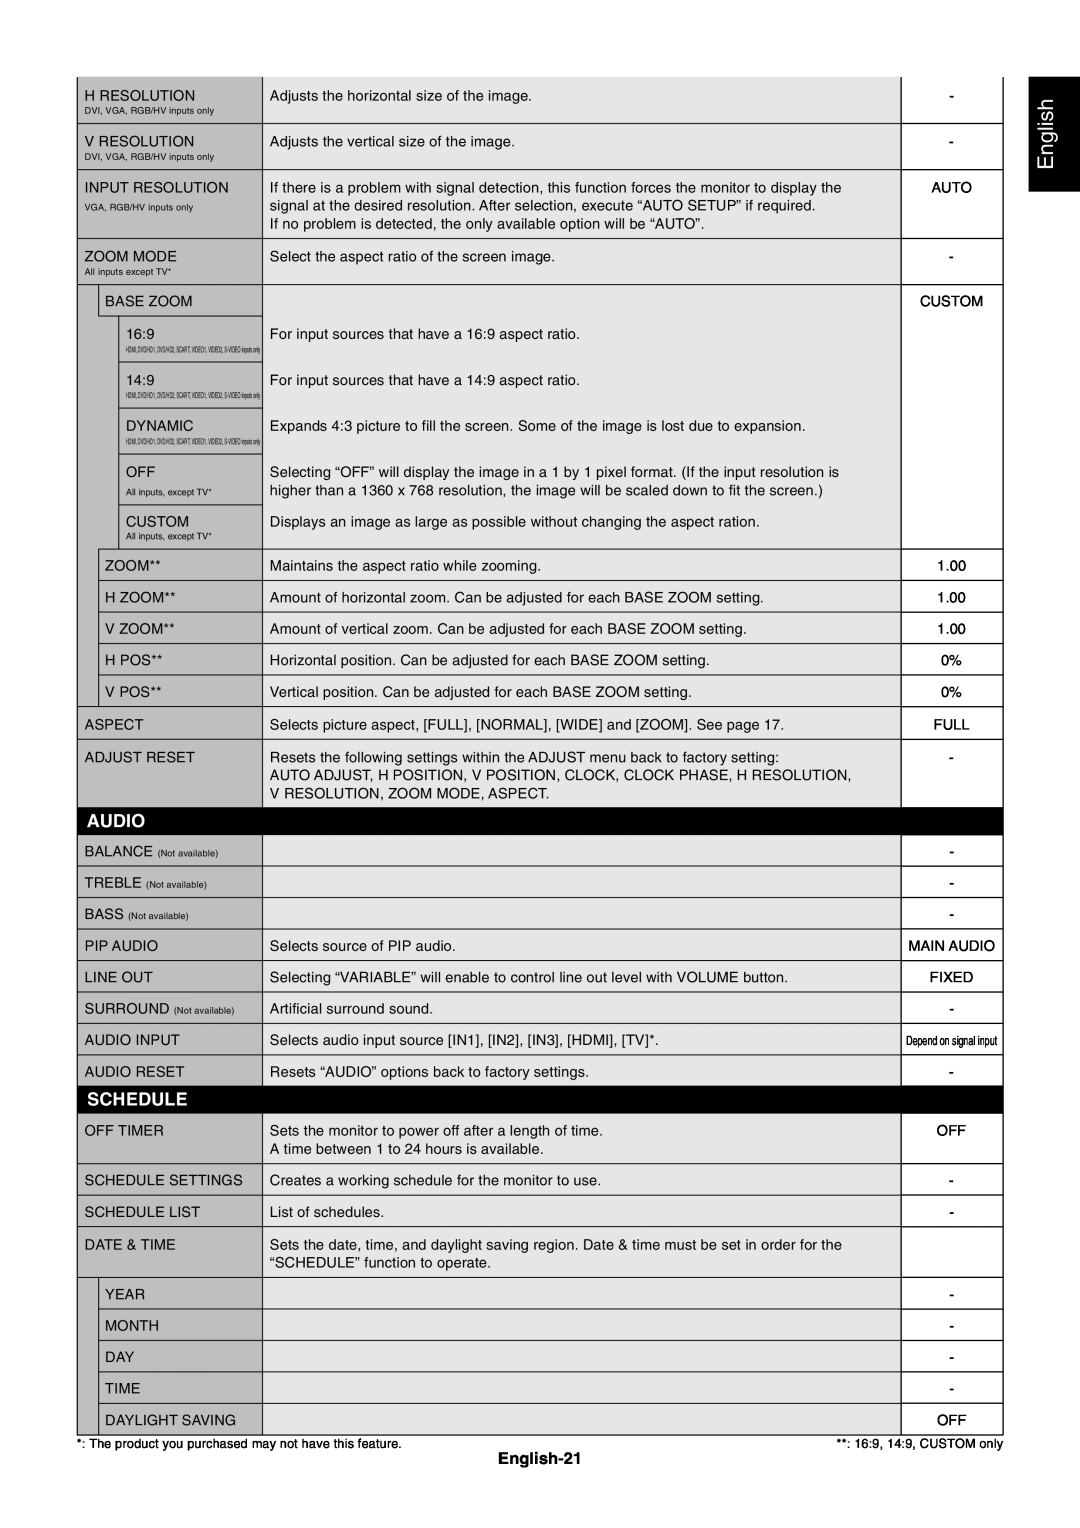 NEC X461UN user manual Audio, Schedule, English-21 